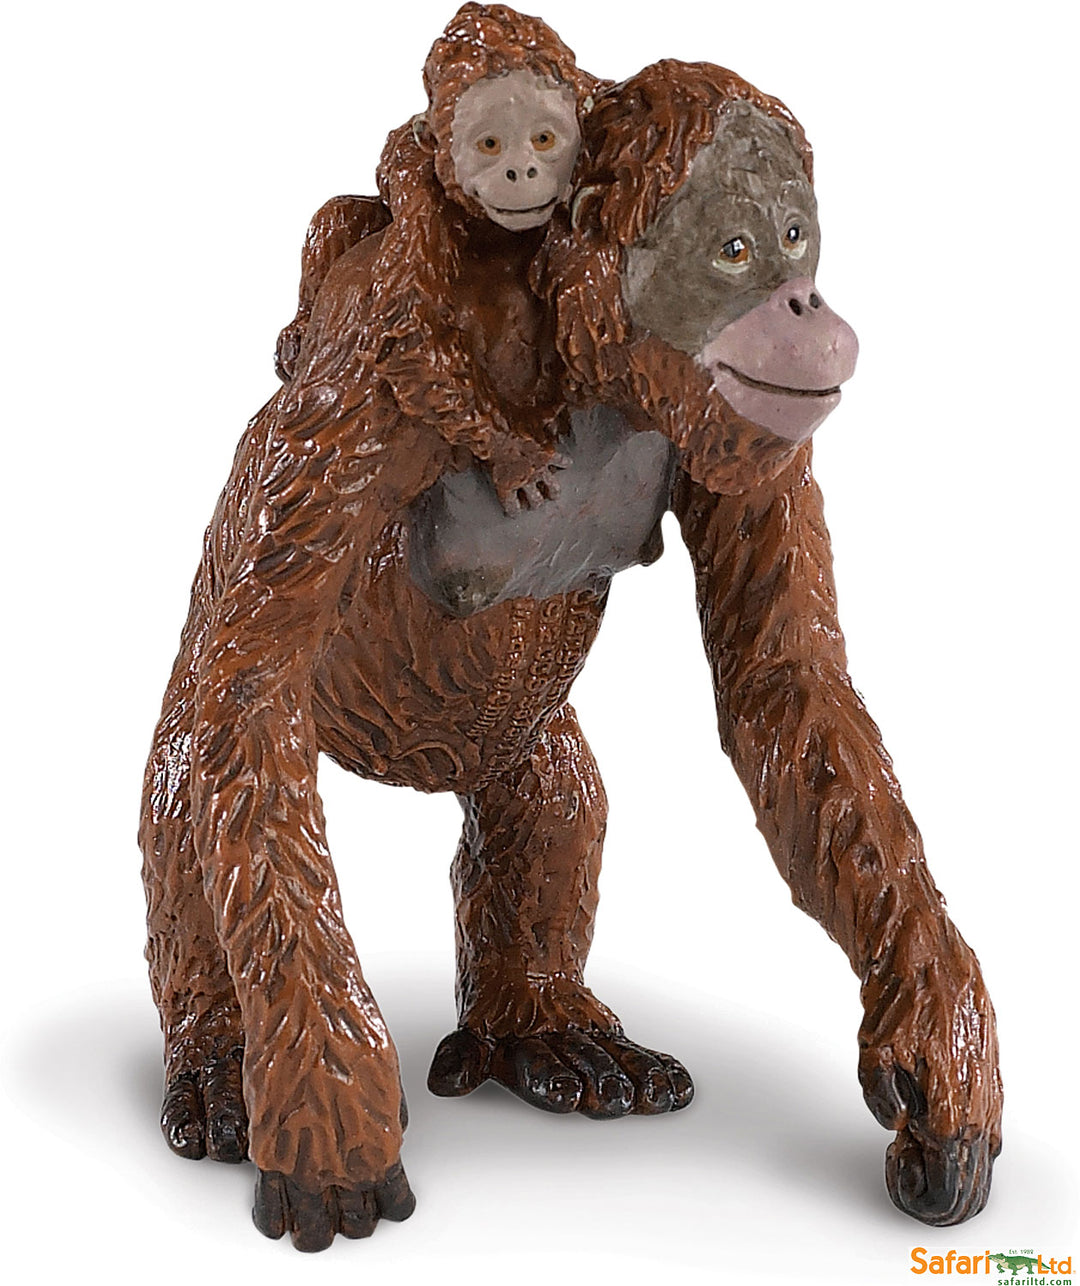 Safari Wild Orangutan with Baby